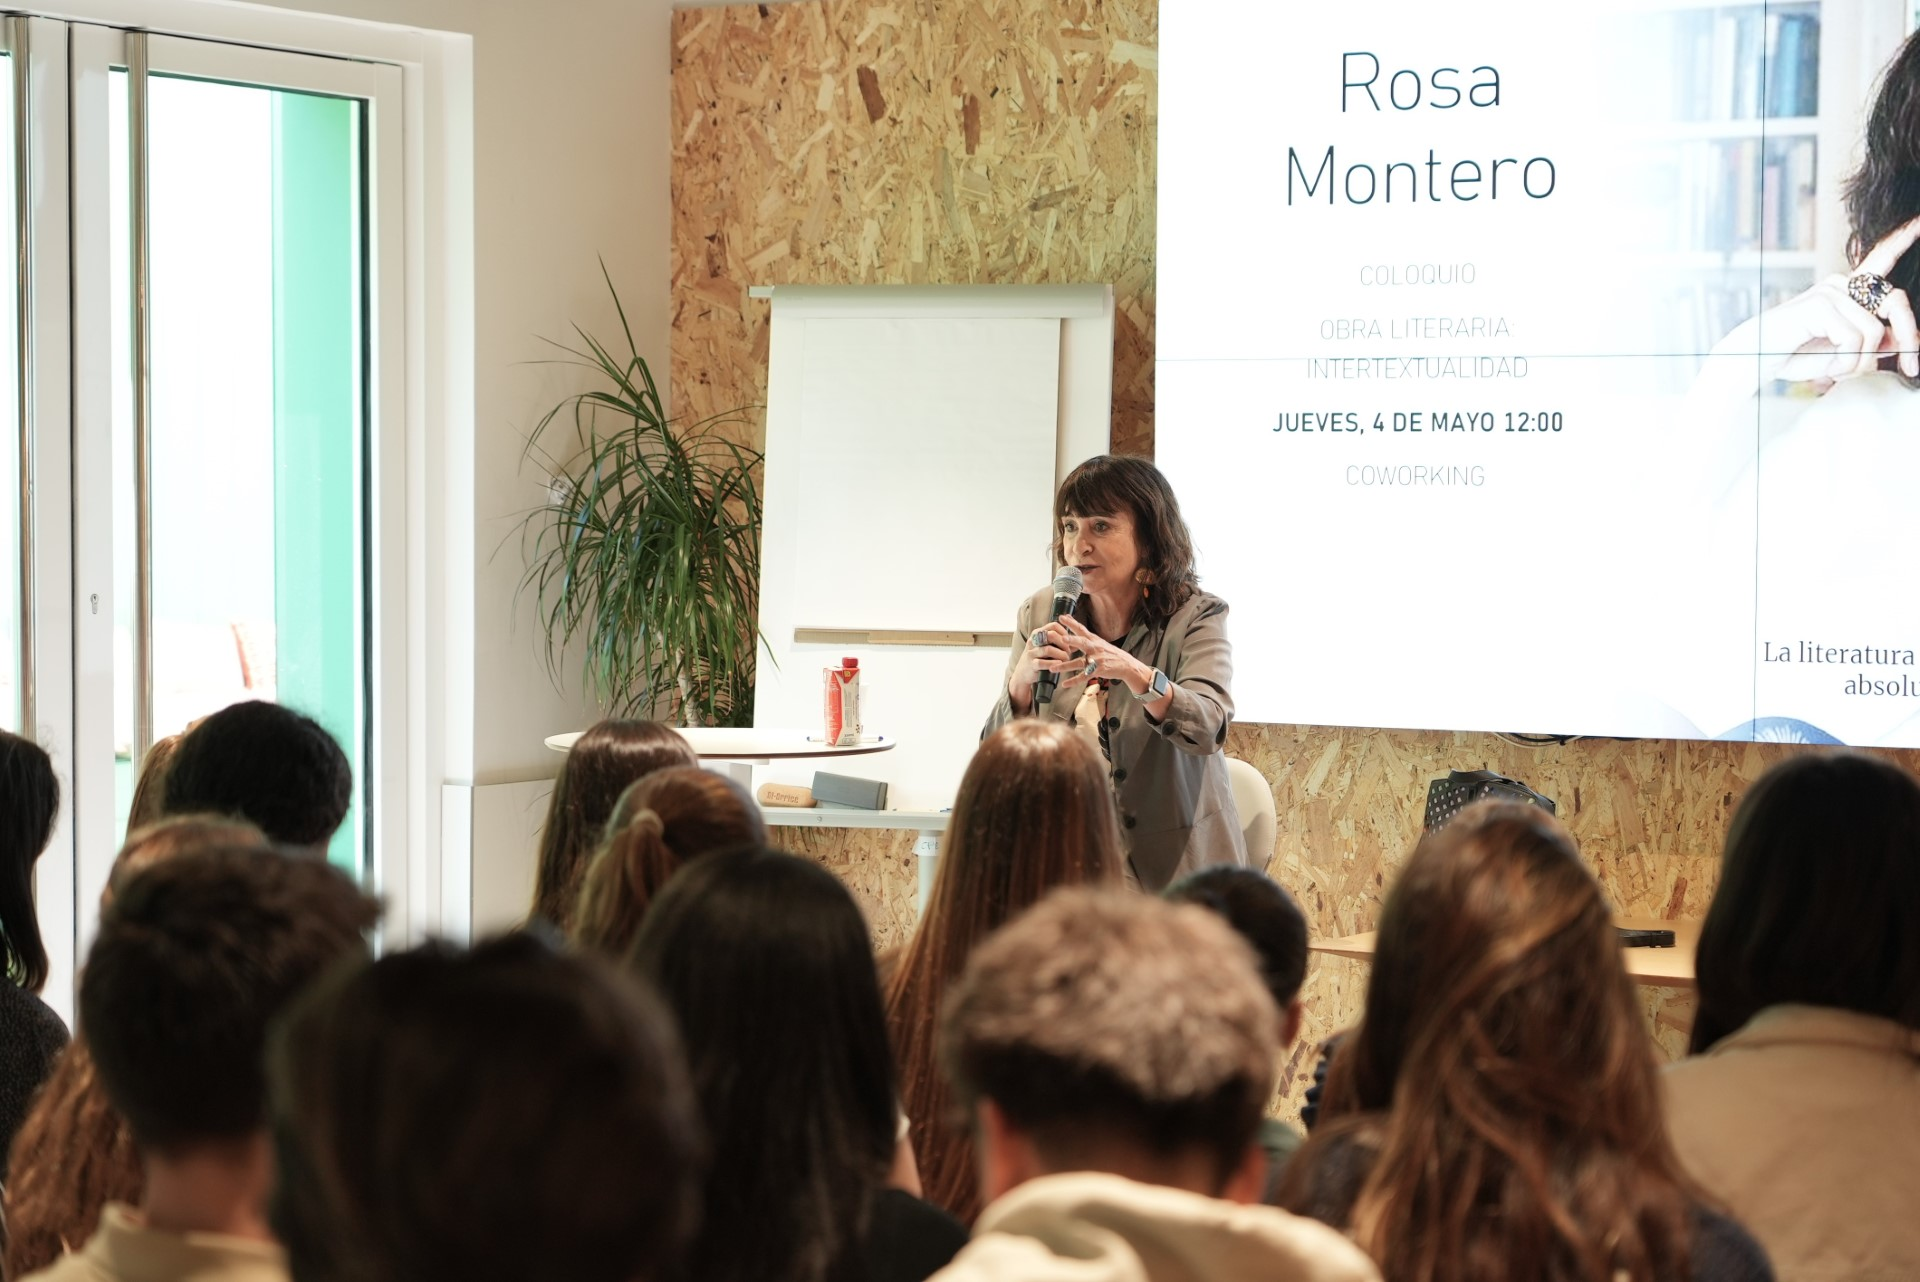 Rosa Montero at TGC: A talk about literature, creativity and fiction